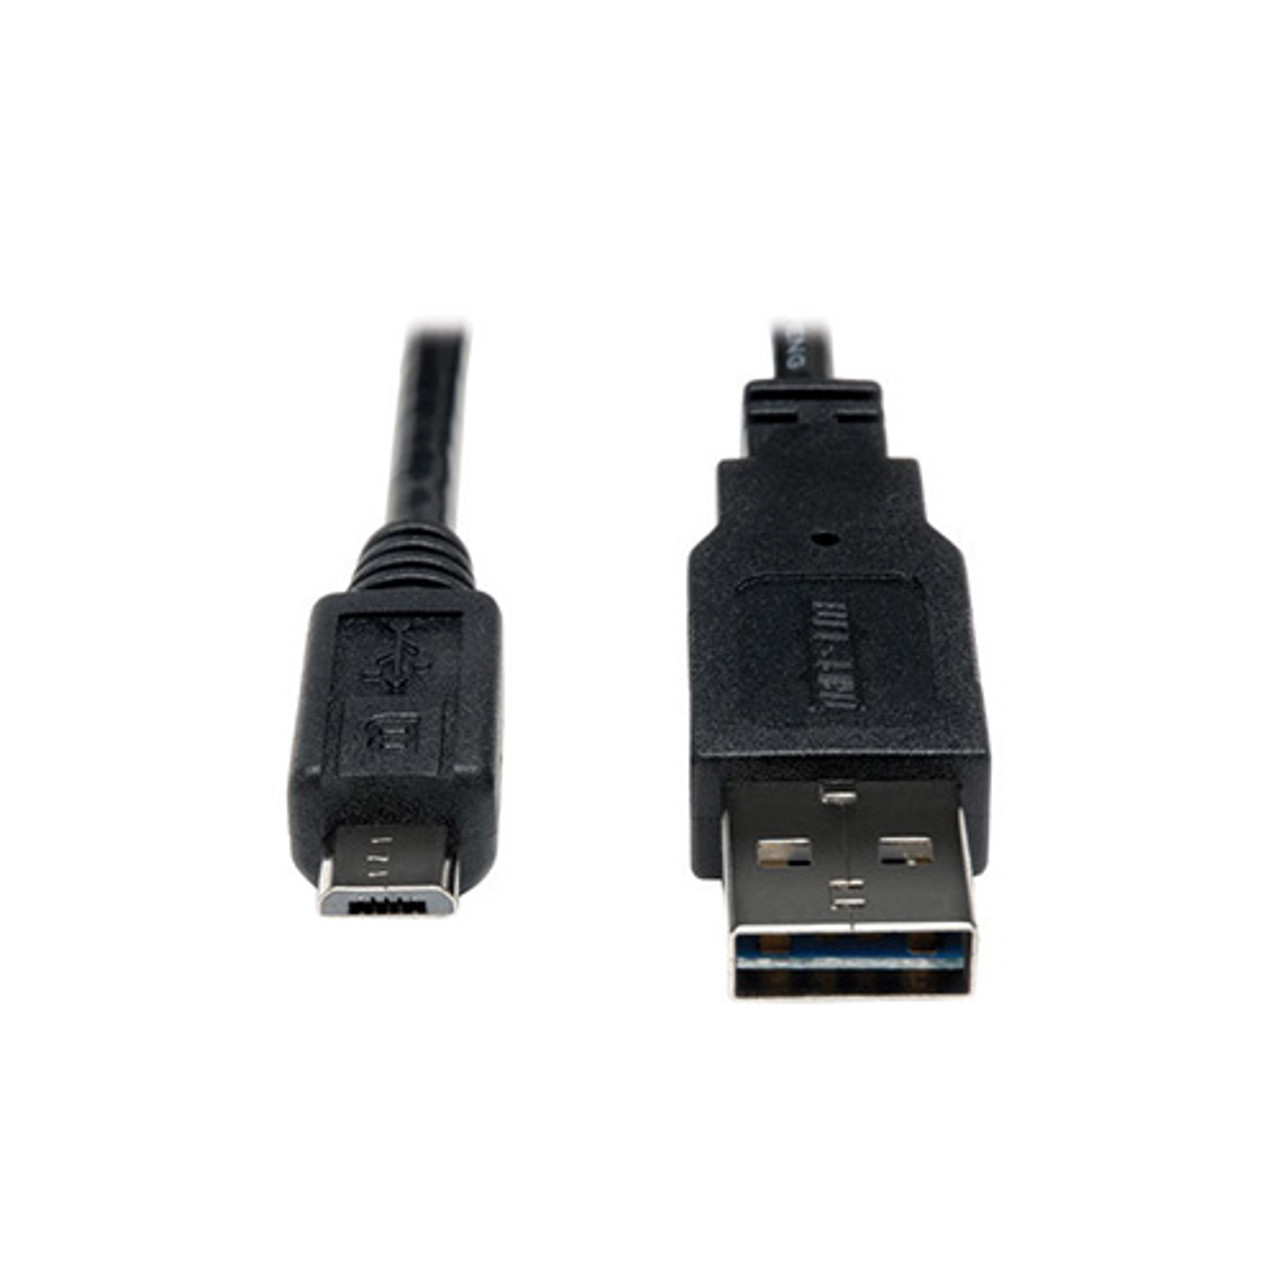 Кабель Micro-USB g5018. Micro-b.1617. U 28 кабель. Usb 2.0 high speed